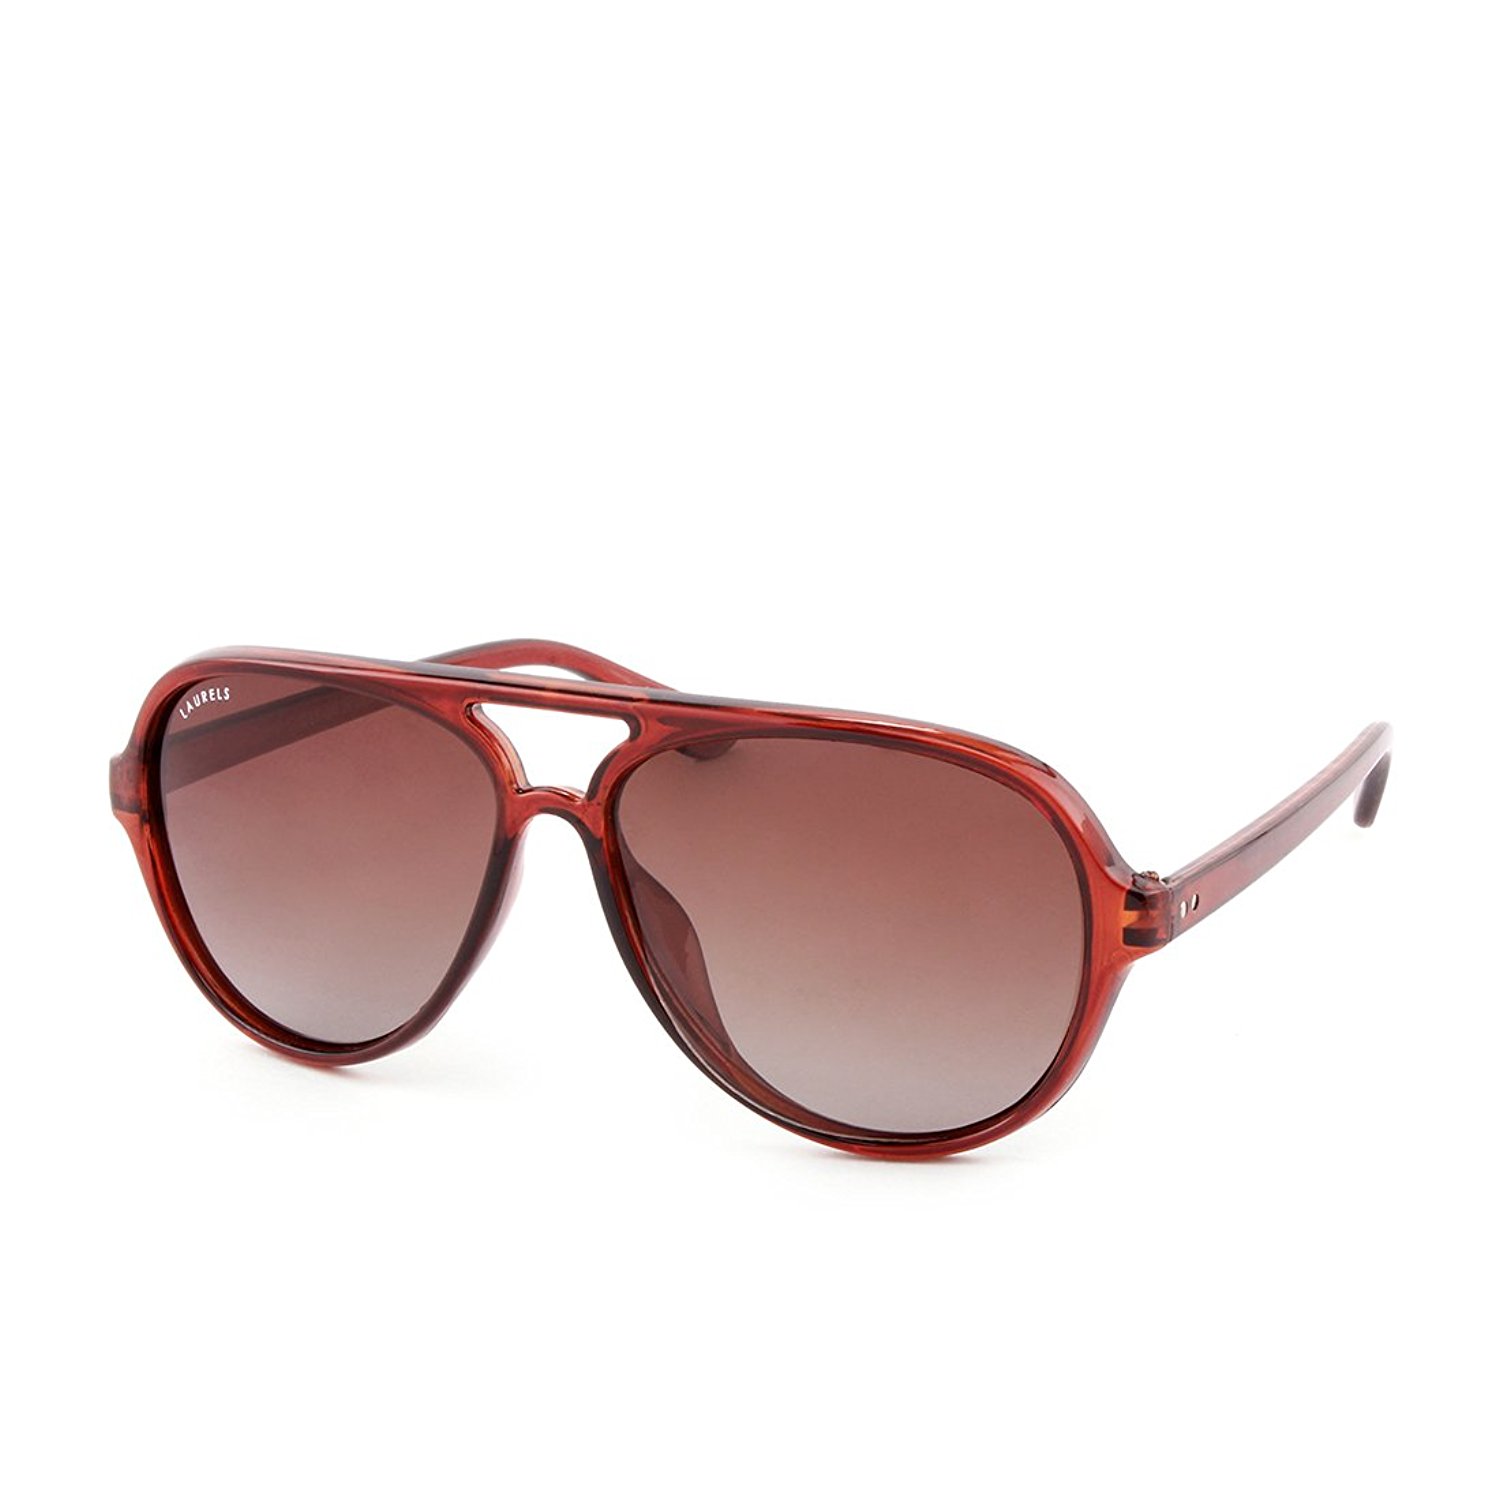 Laurels Polarized Unisex Sunglasses At Rs 99 Only - Amazon